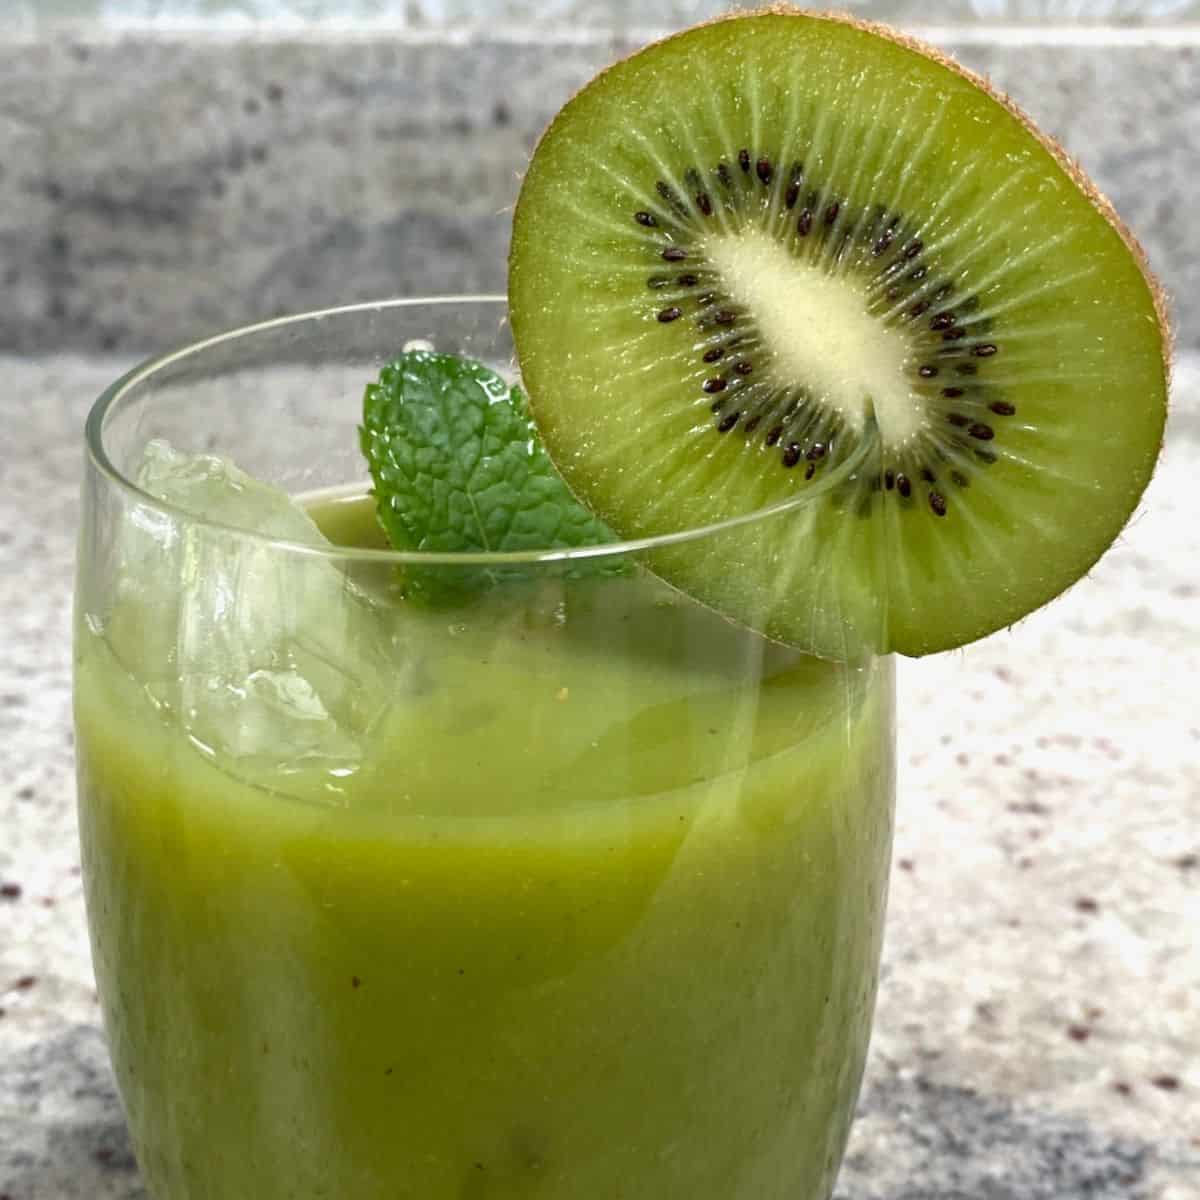 A glass with kiwi juice